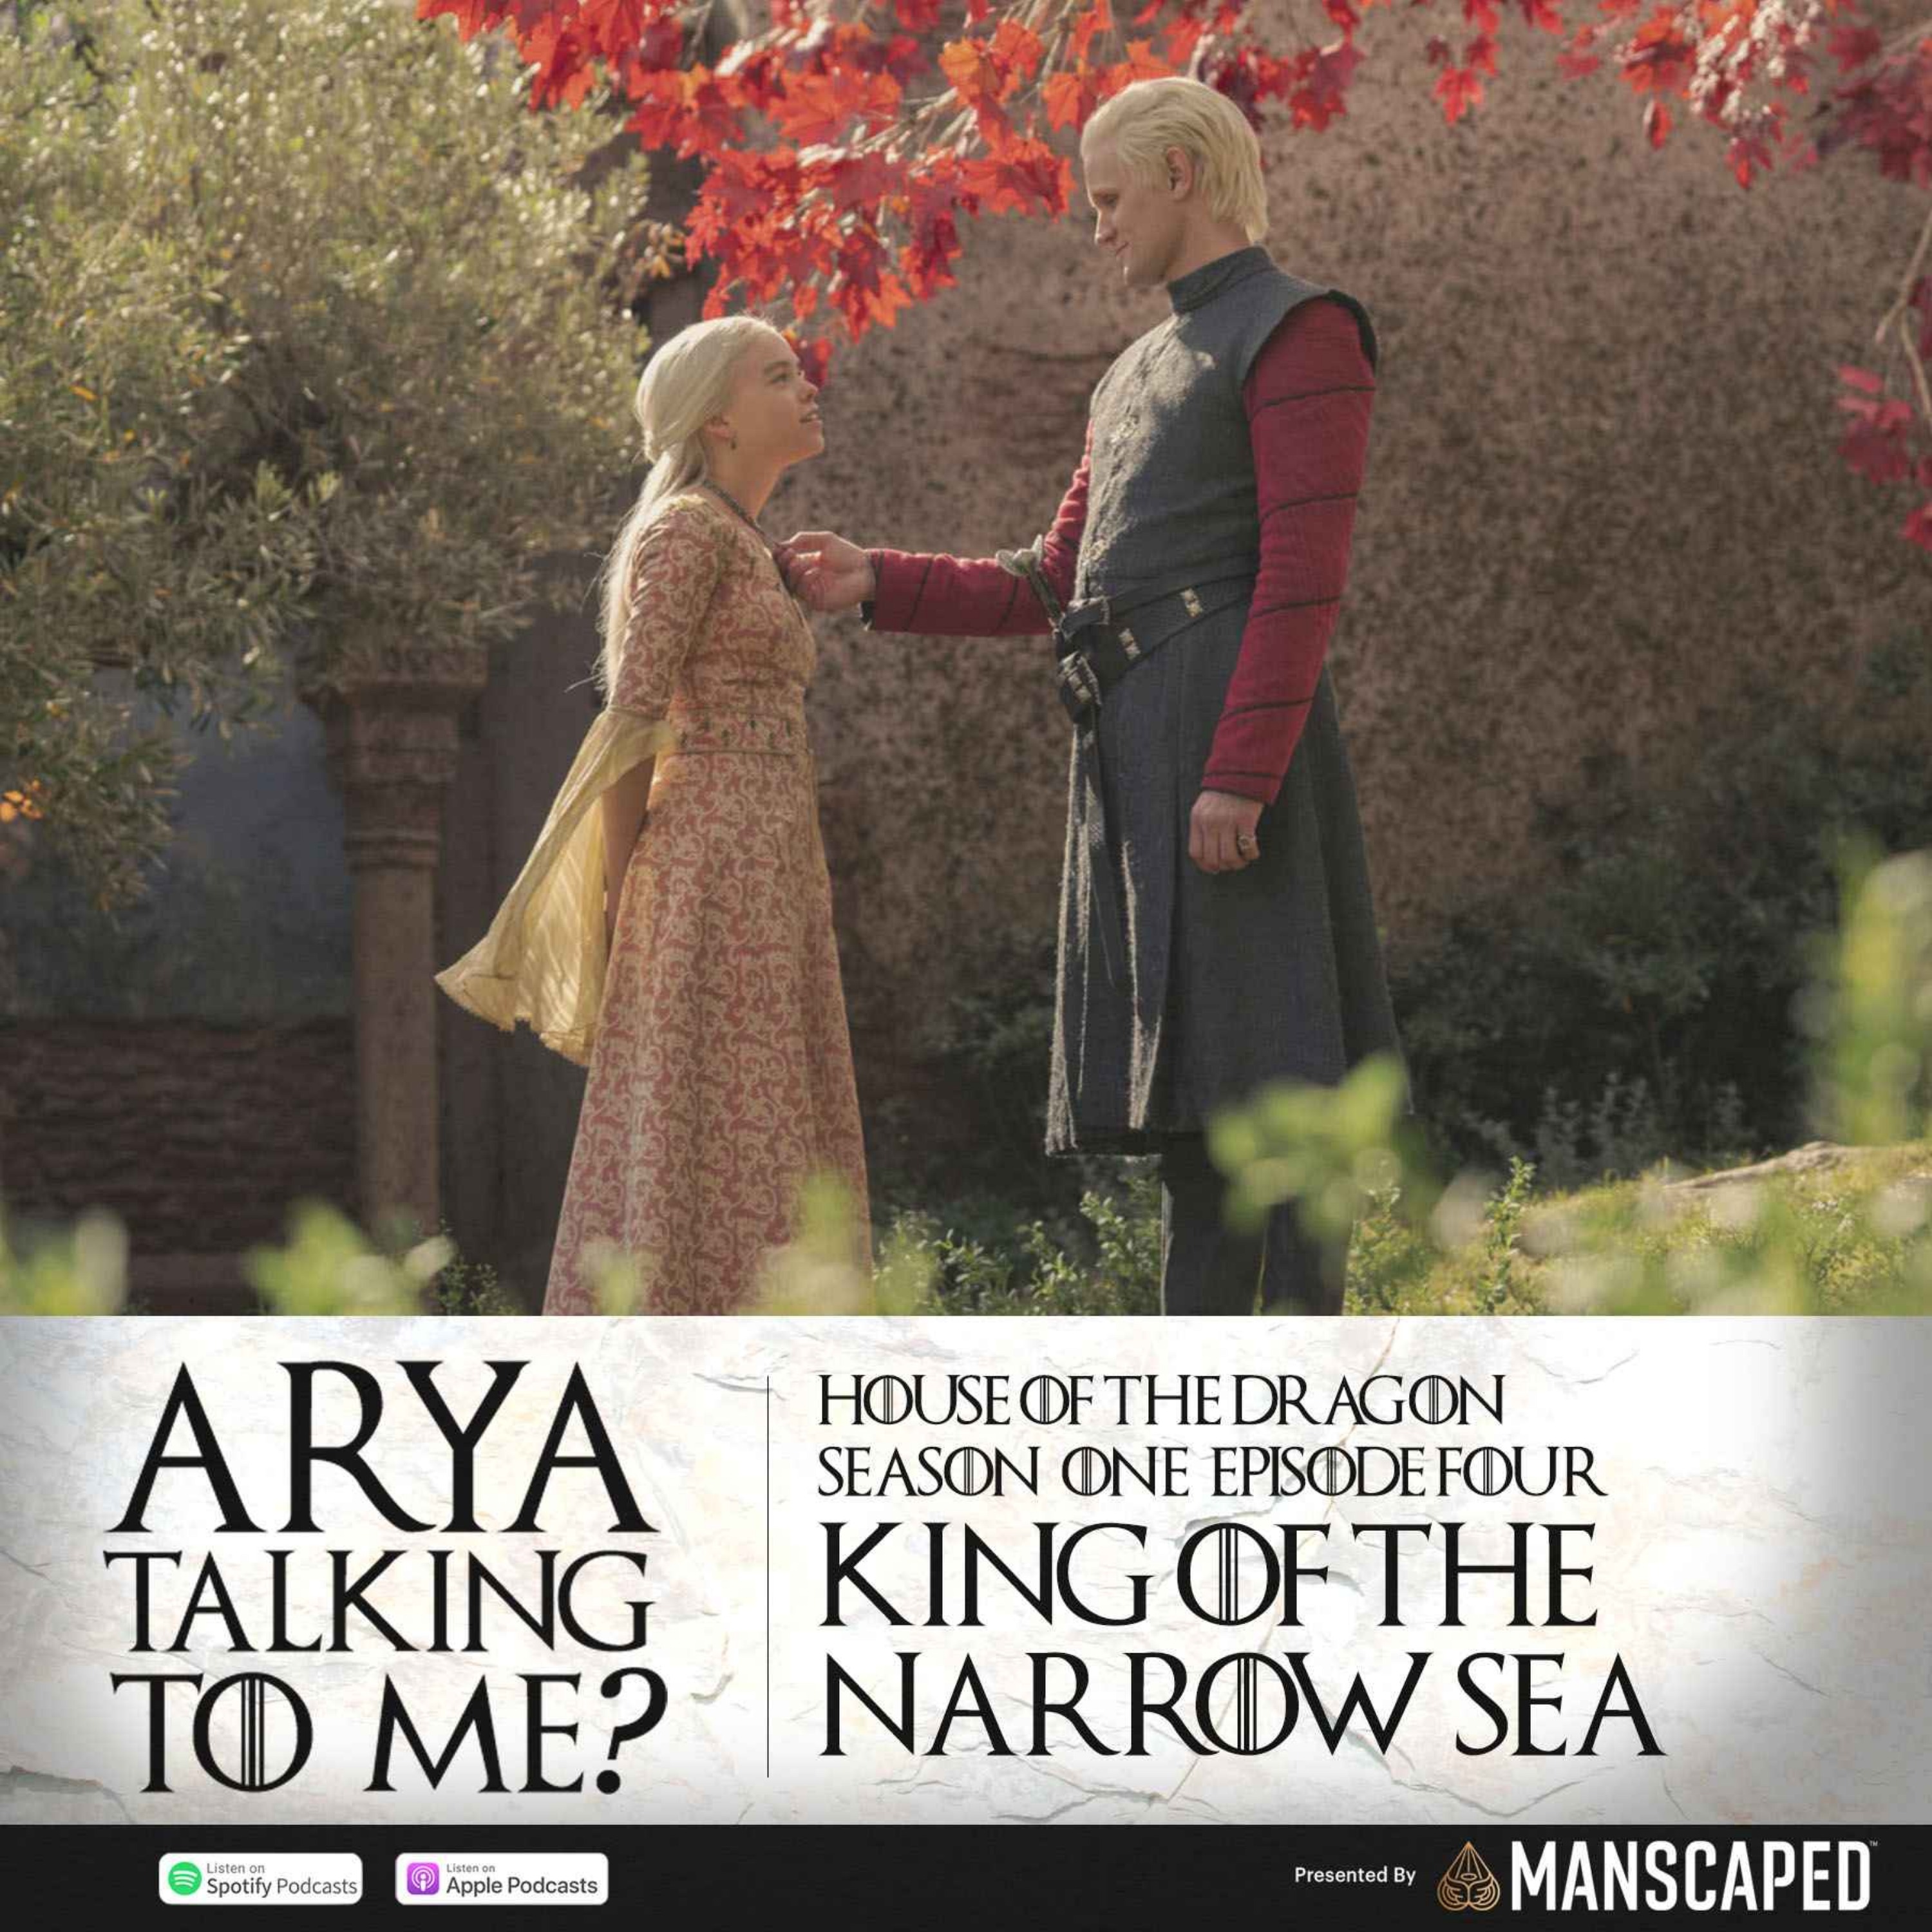 Season 1 Episode 4 ’King of the Narrow Sea’